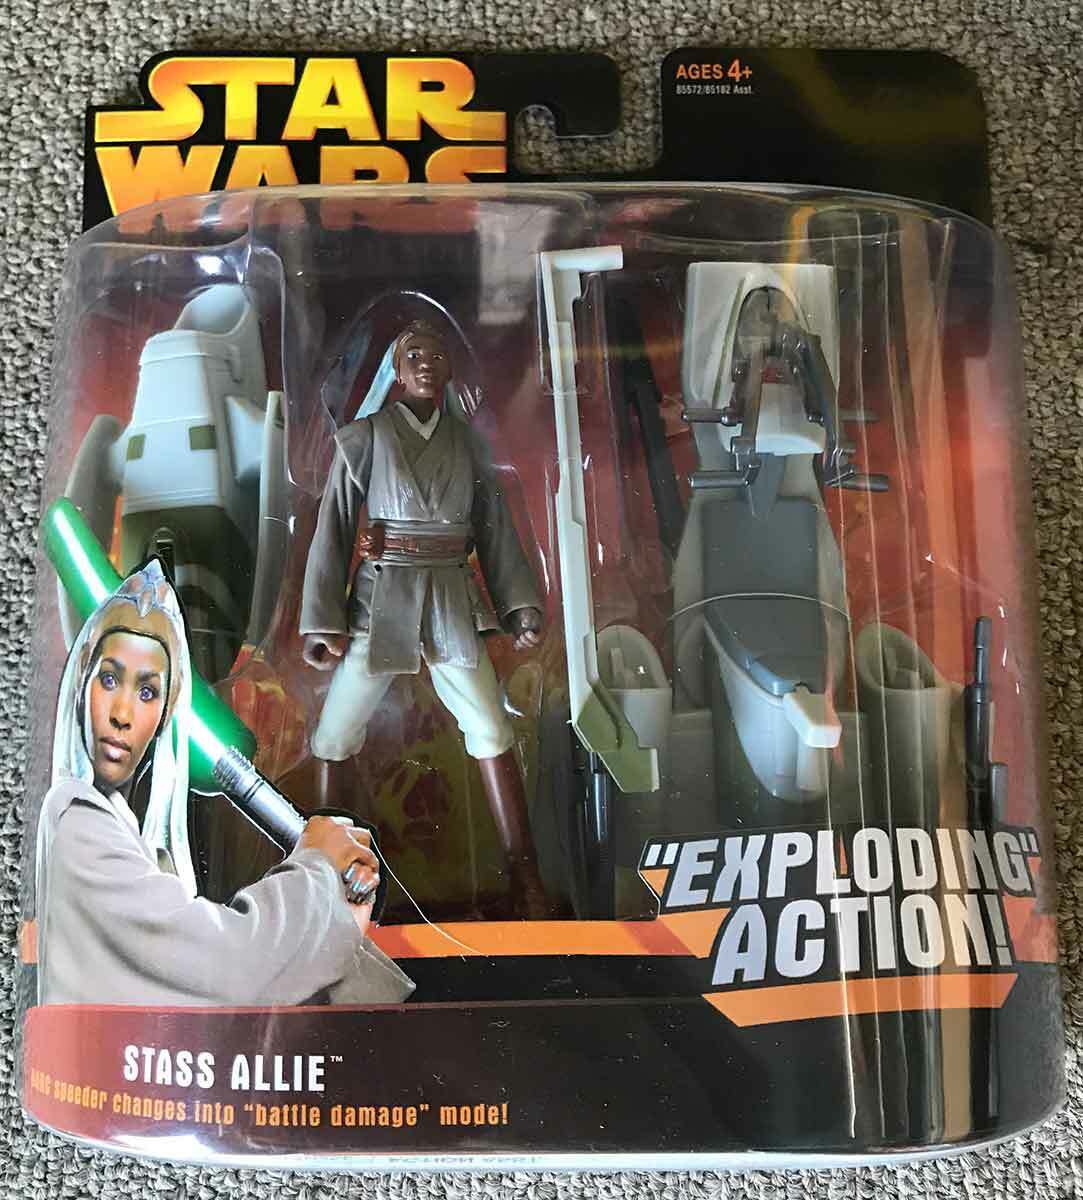 Star Wars Revenge of the Sith Stass Allie Exploding Action Speeder Action Figure